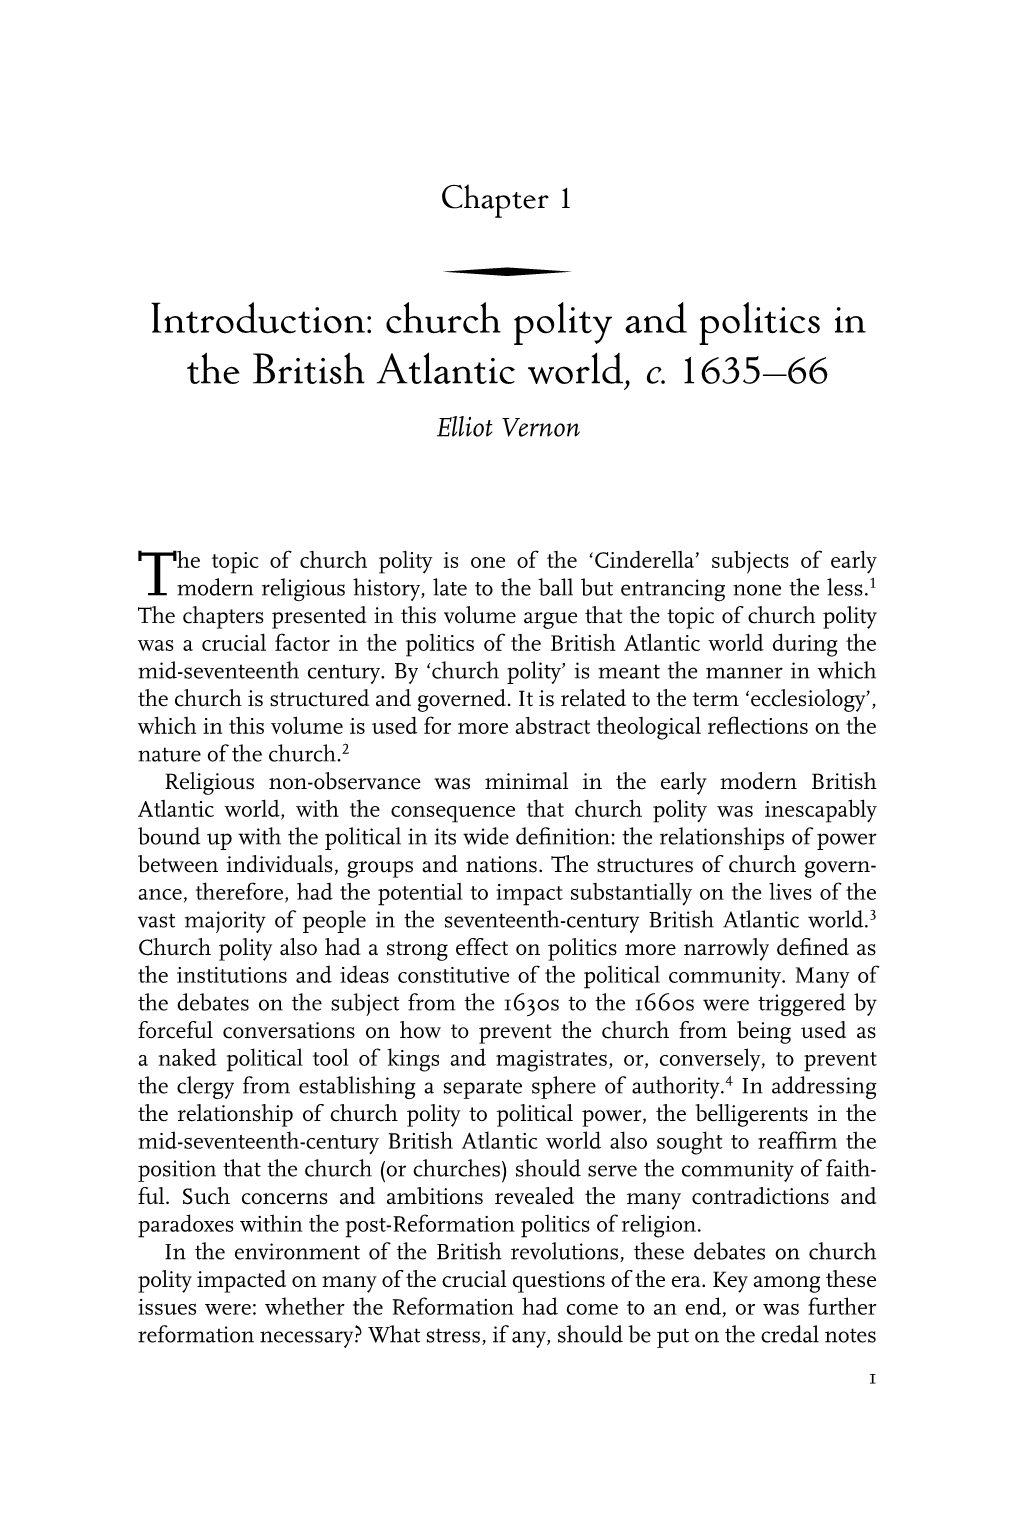 Introduction: Church Polity and Politics in the British Atlantic World, C. 1635–66 Elliot Vernon